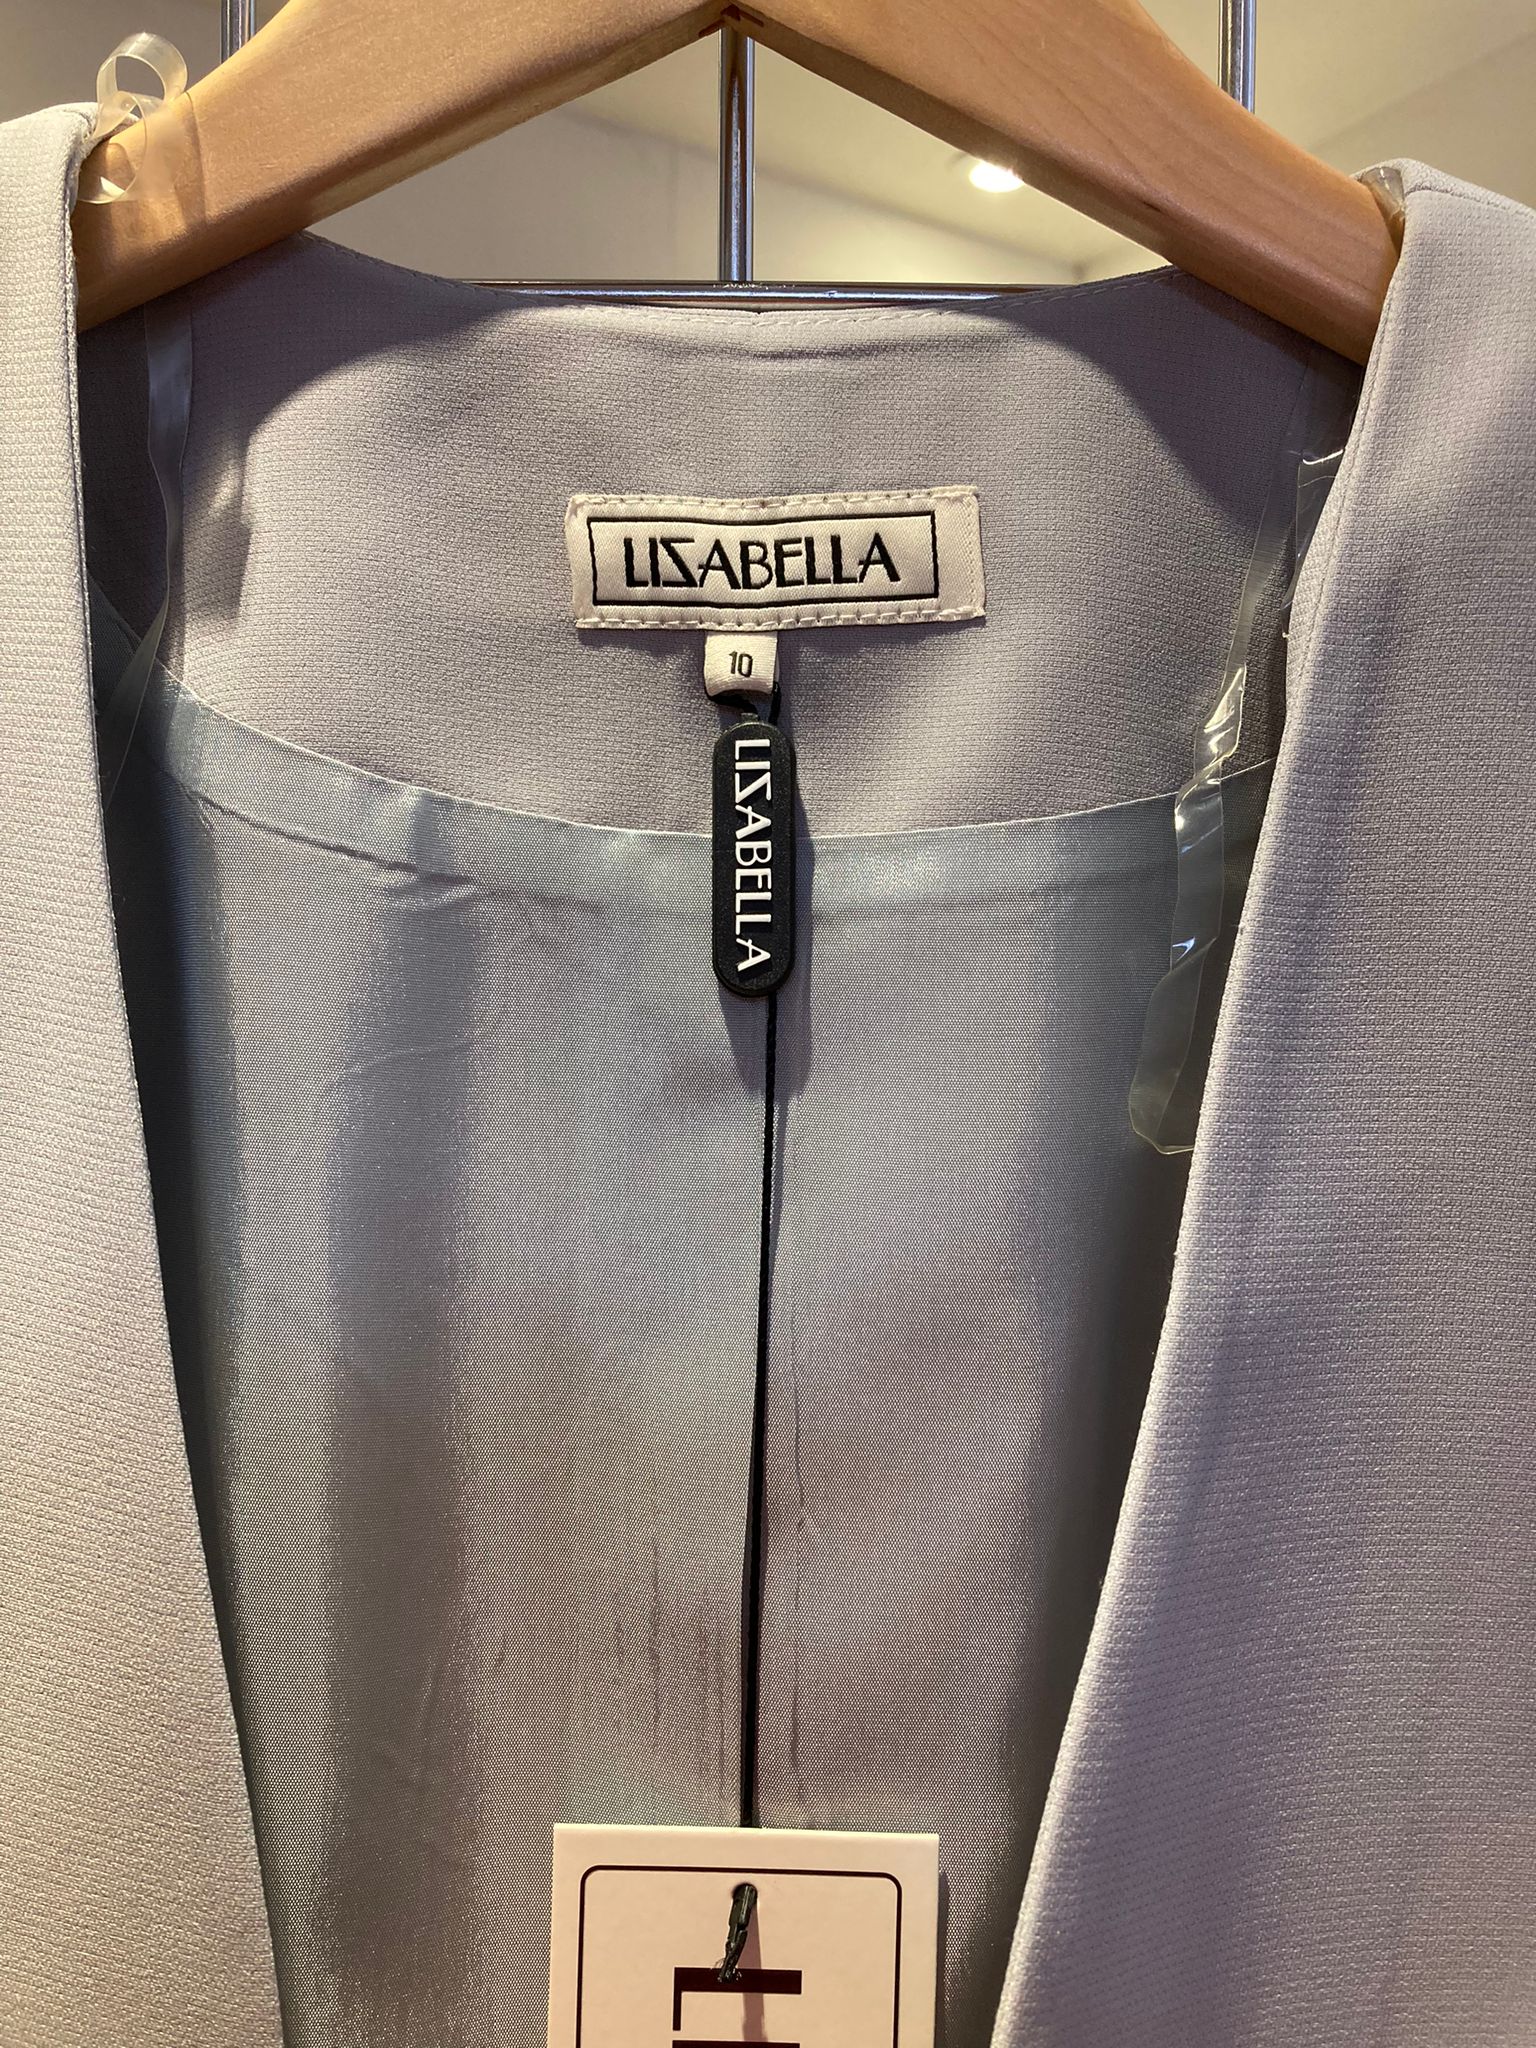 Lizabella bolero jacket - Maya Maya Ltd